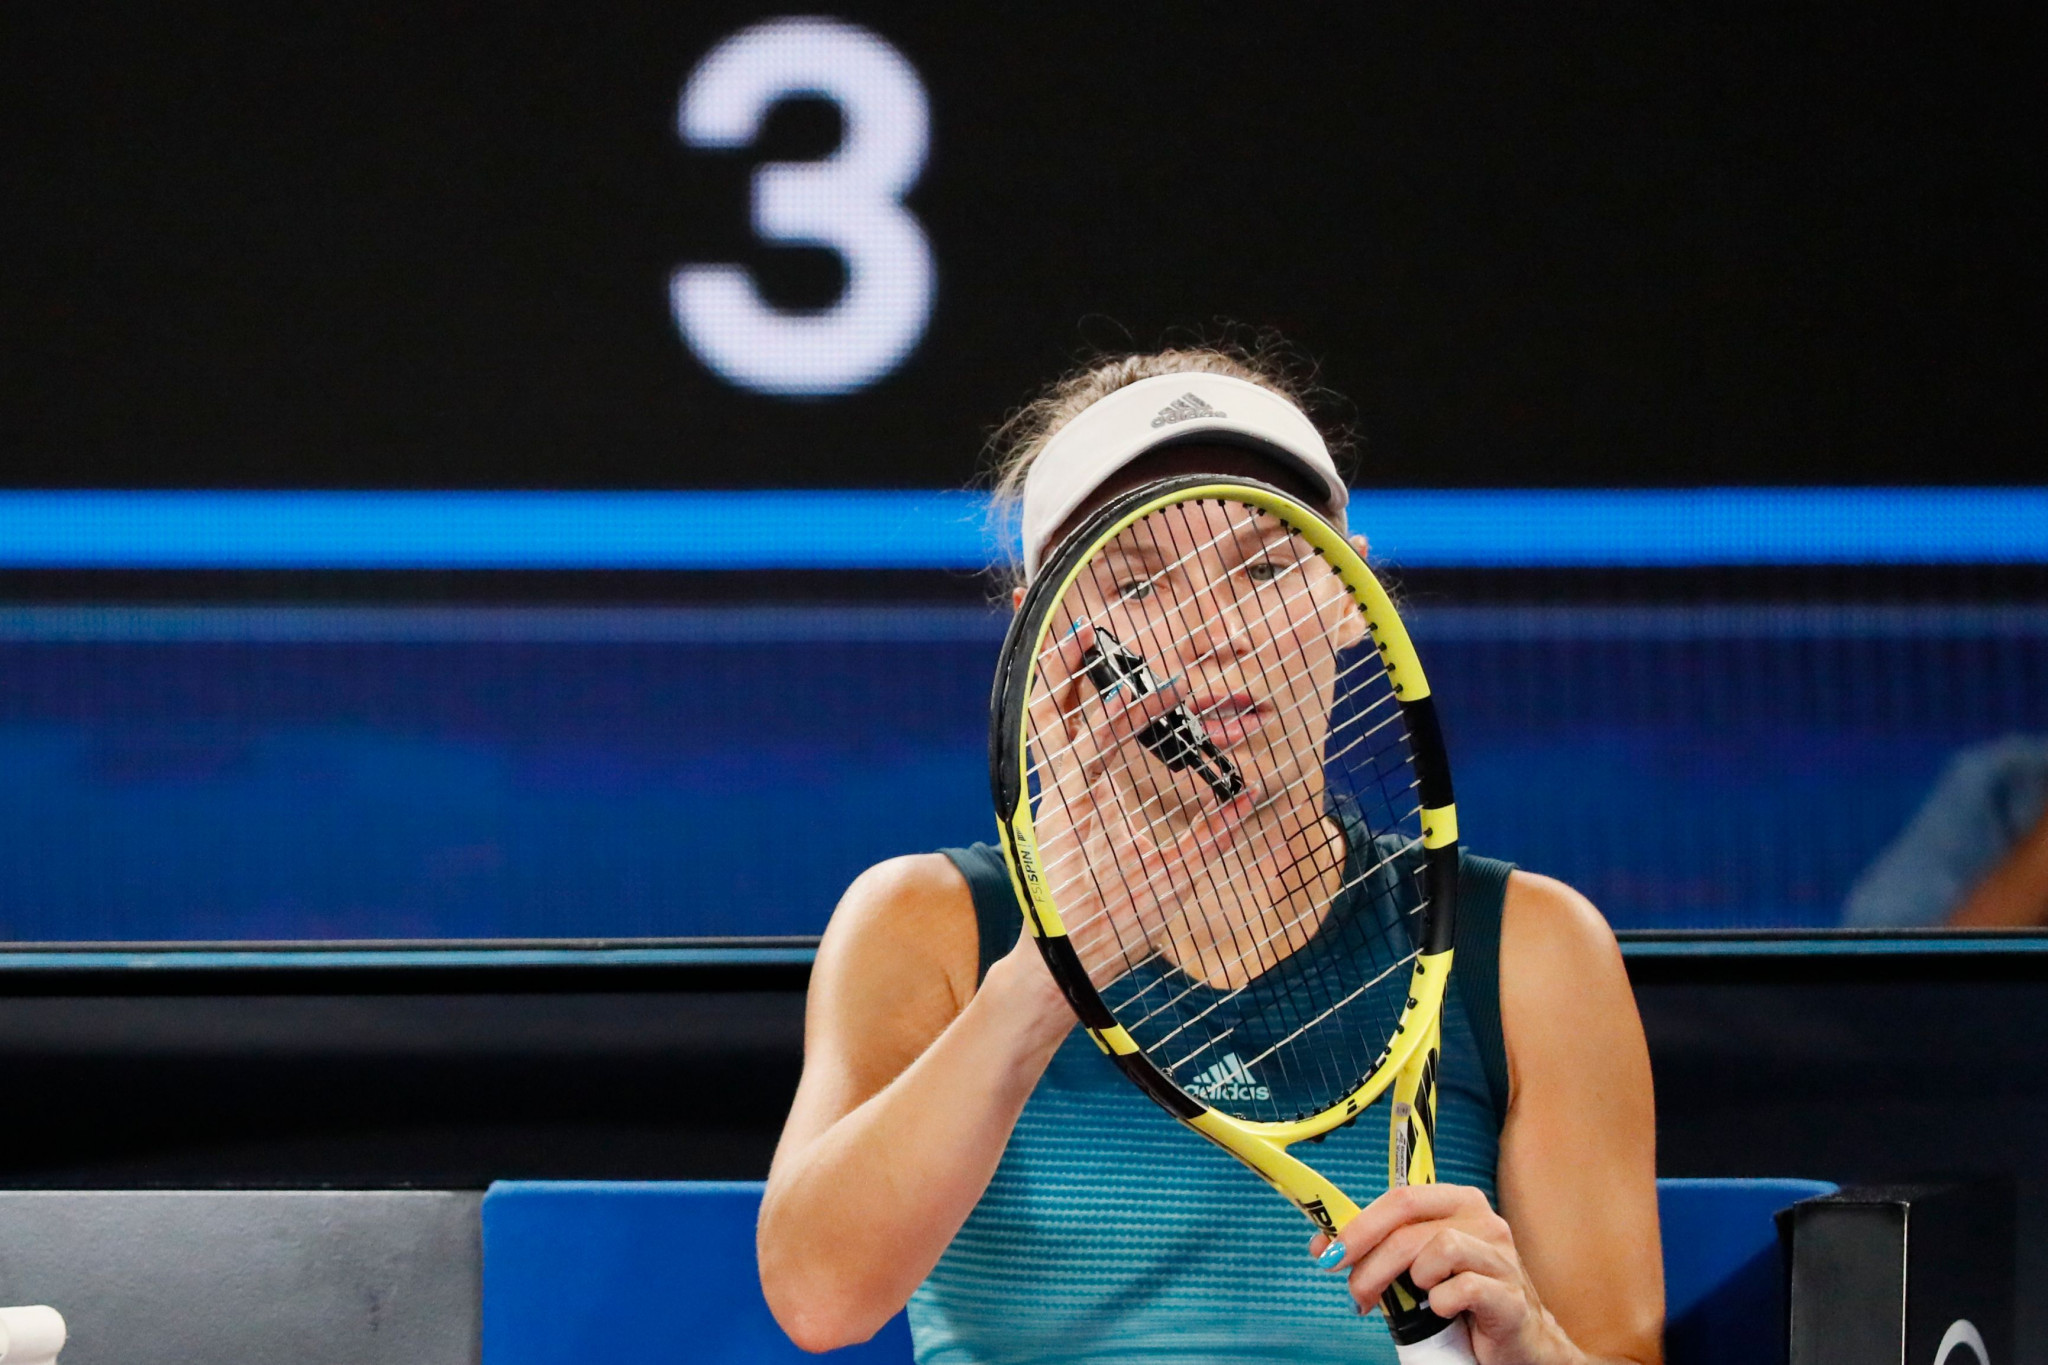 The Russian overcame defending champion Caroline Wozniacki ©Getty Images